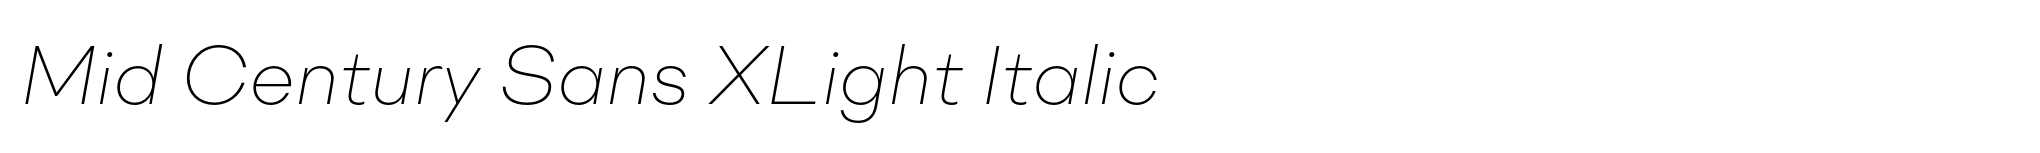 Mid Century Sans XLight Italic image